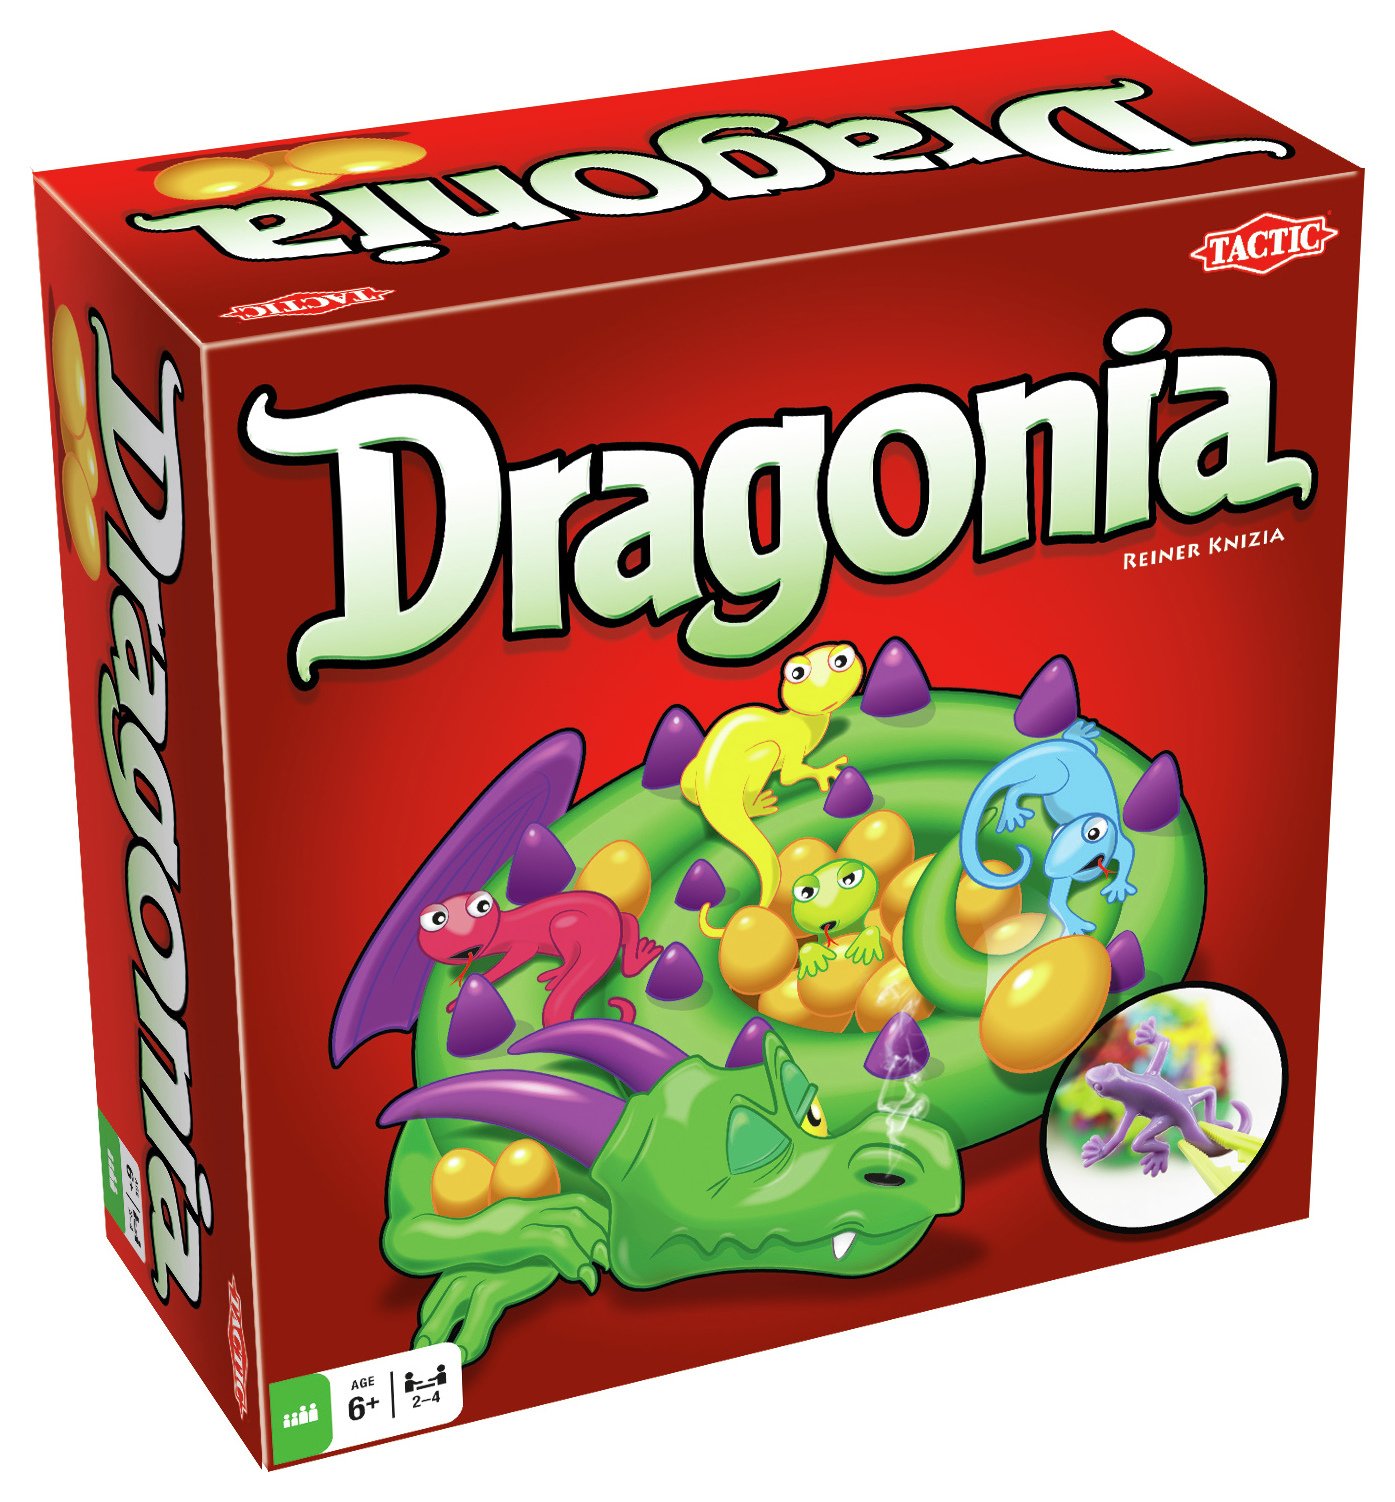 Tactic Games - Dragonia